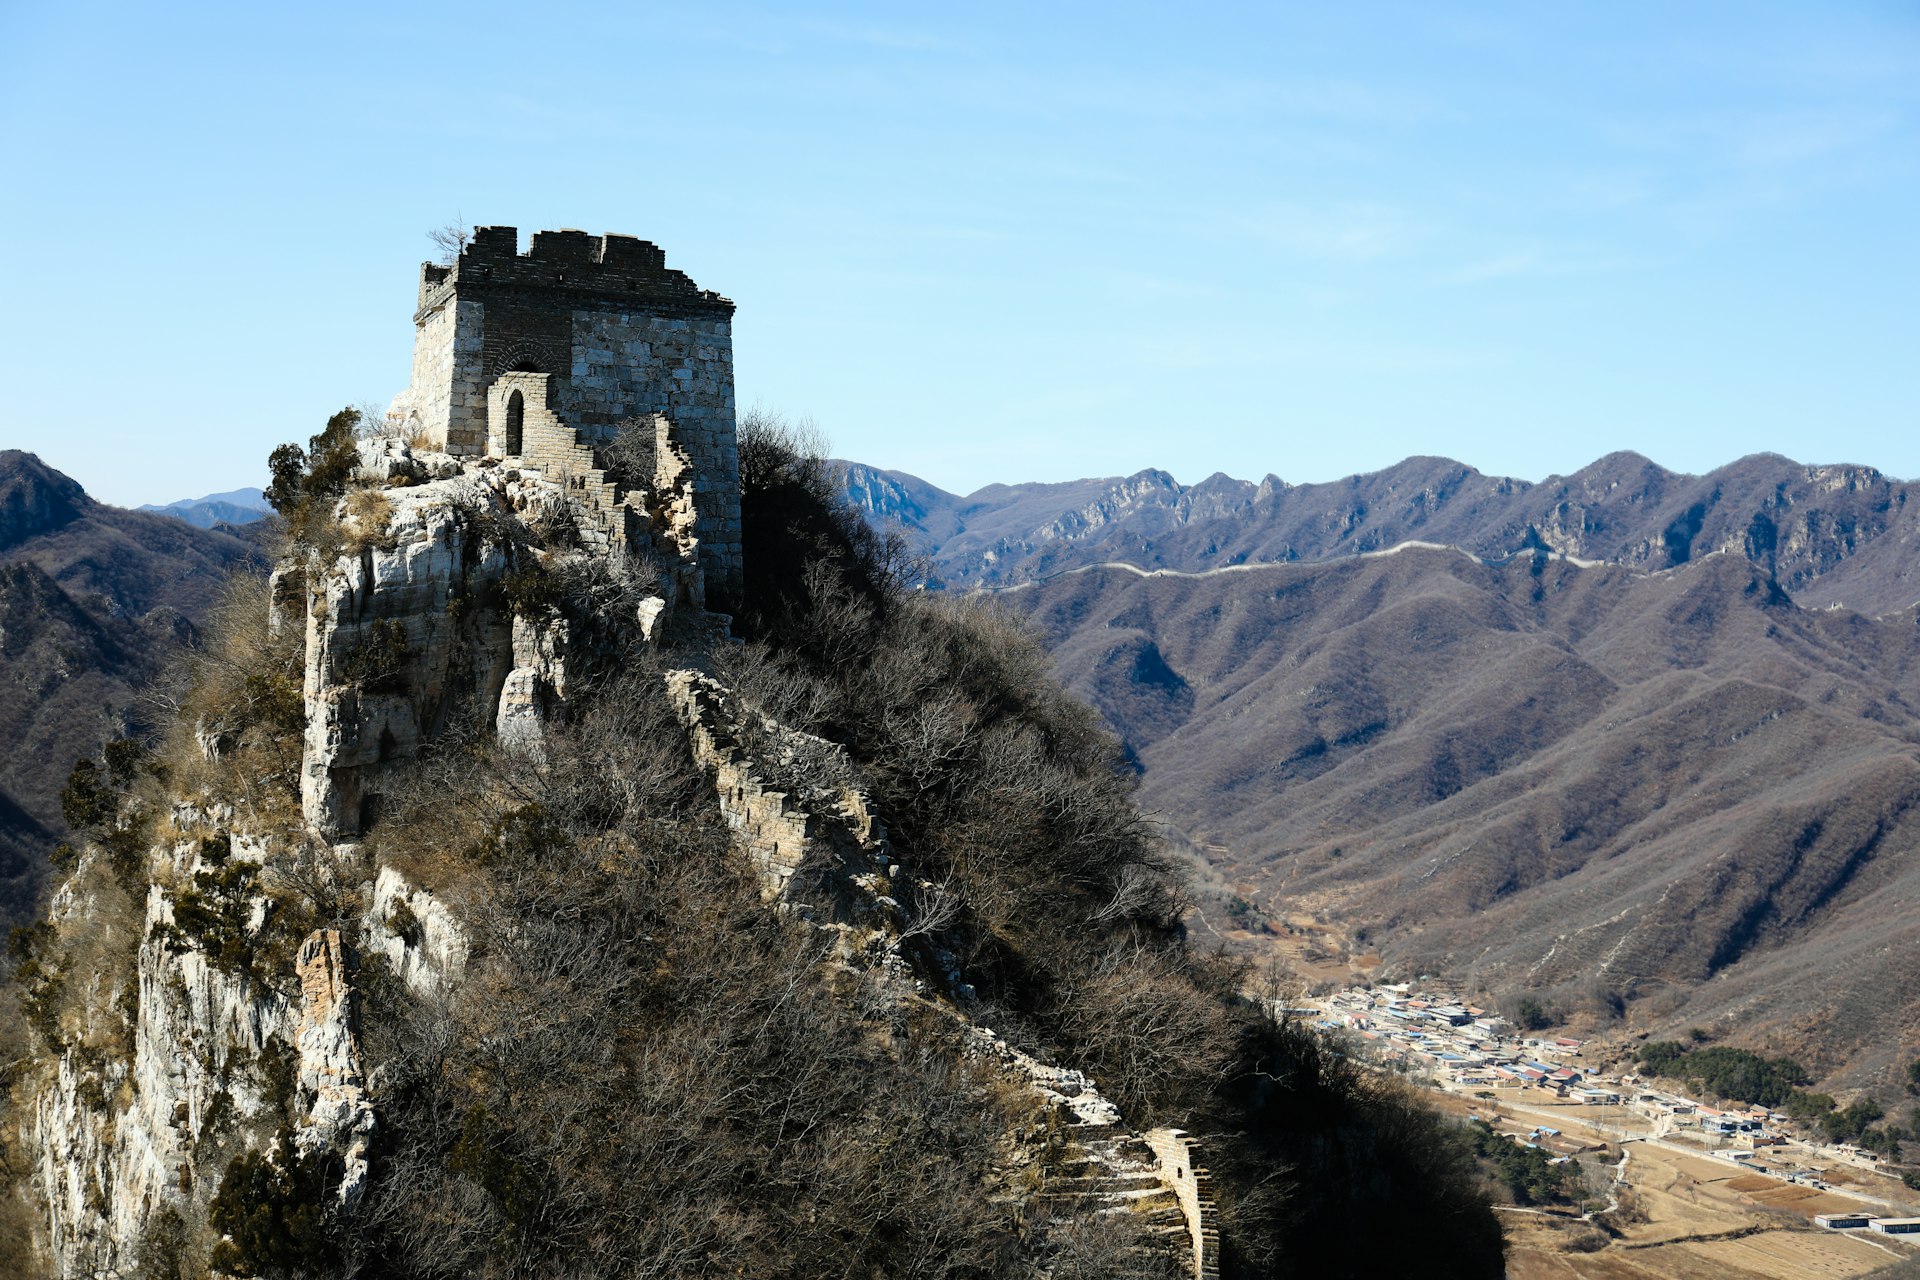 Zhengbeilou Tower on the Jiankou of the Great Wall, China